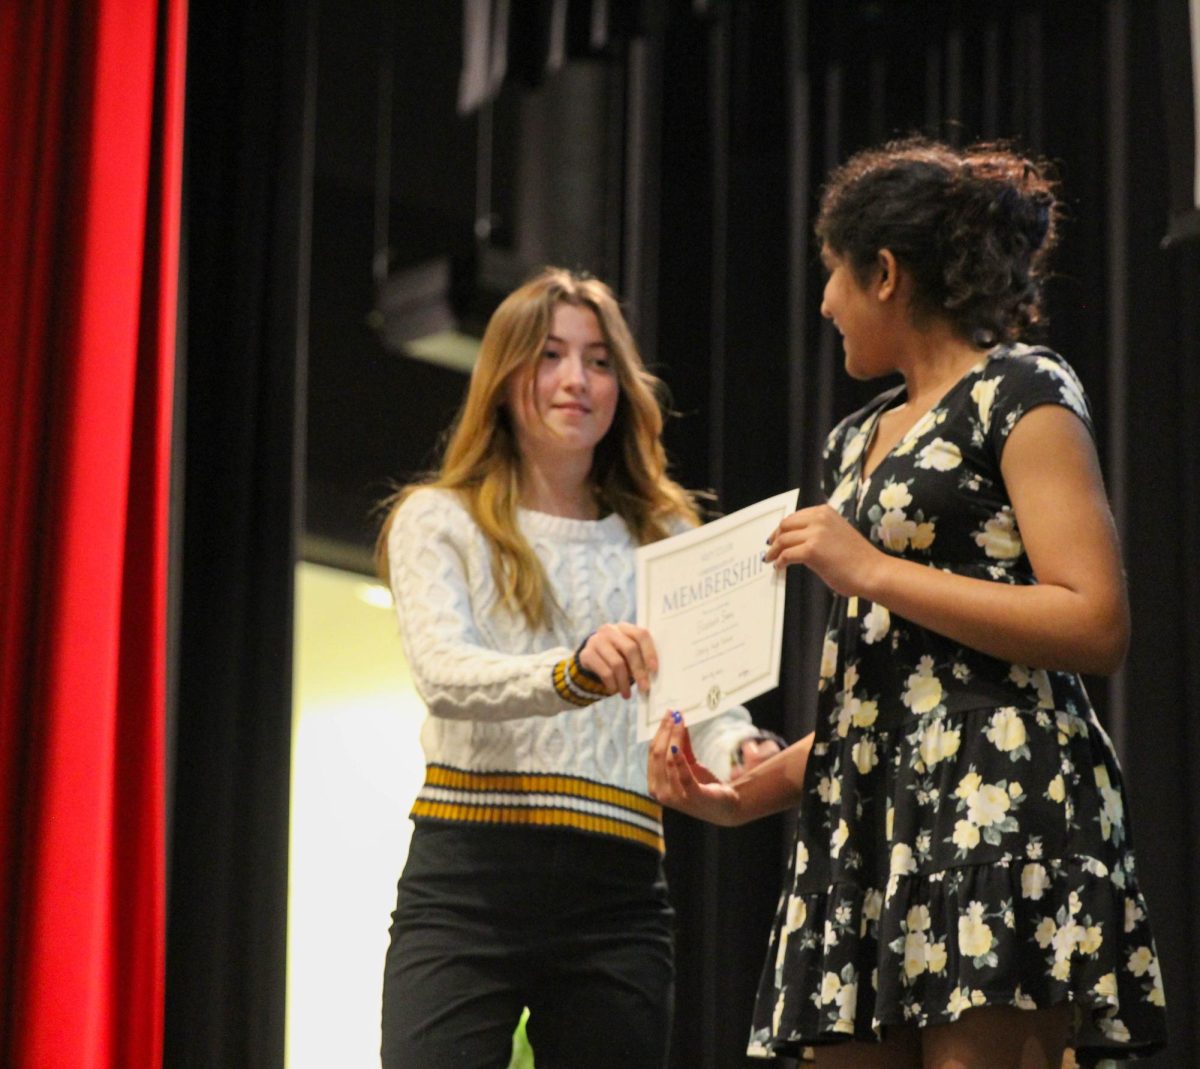 Senior, and former president of Key Club, Emma Thomas gives freshman Ellie Simon a membership certificate.